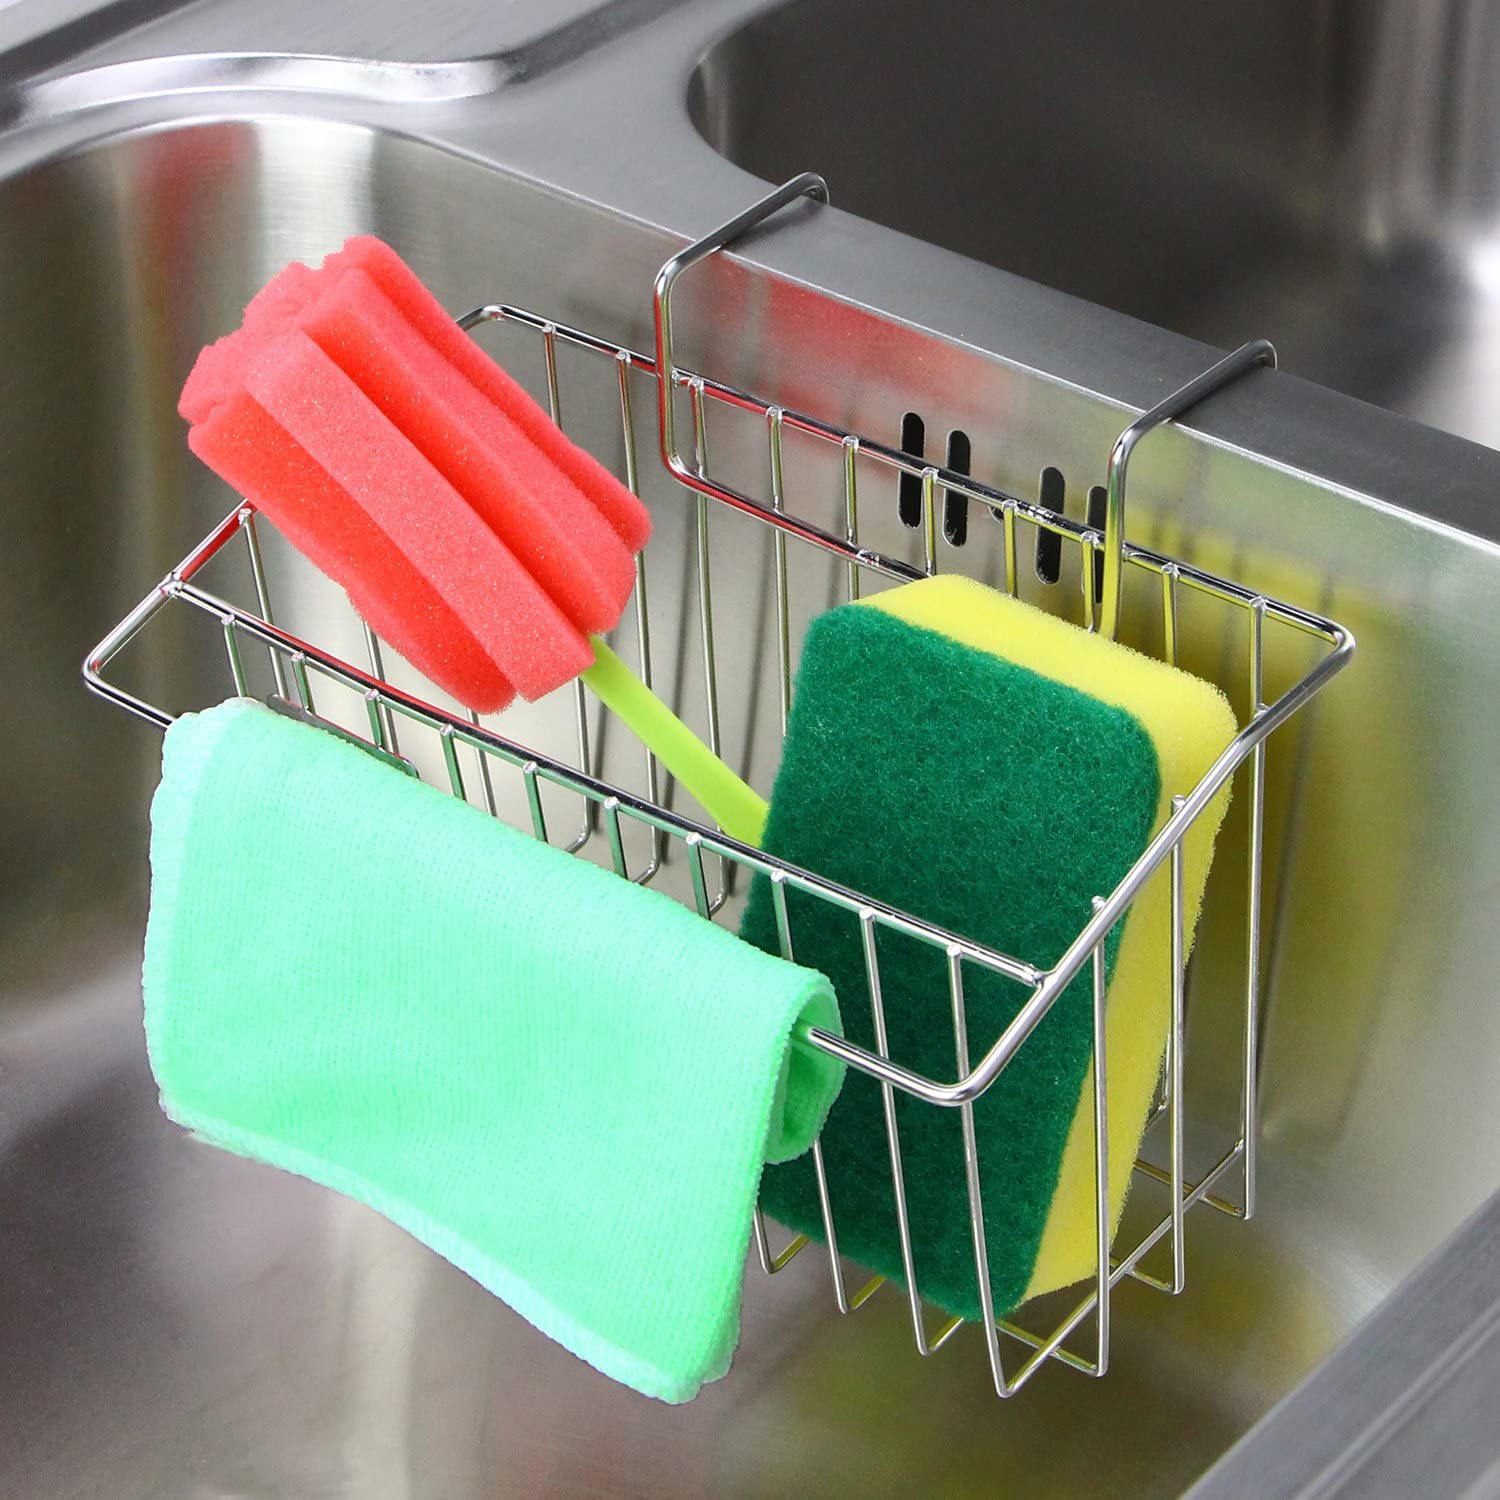 Aiduy Sponge Holder, Sink Caddy Kitchen Brush Soap Dishwashing Liquid Drainer Rack - Stainless Steel